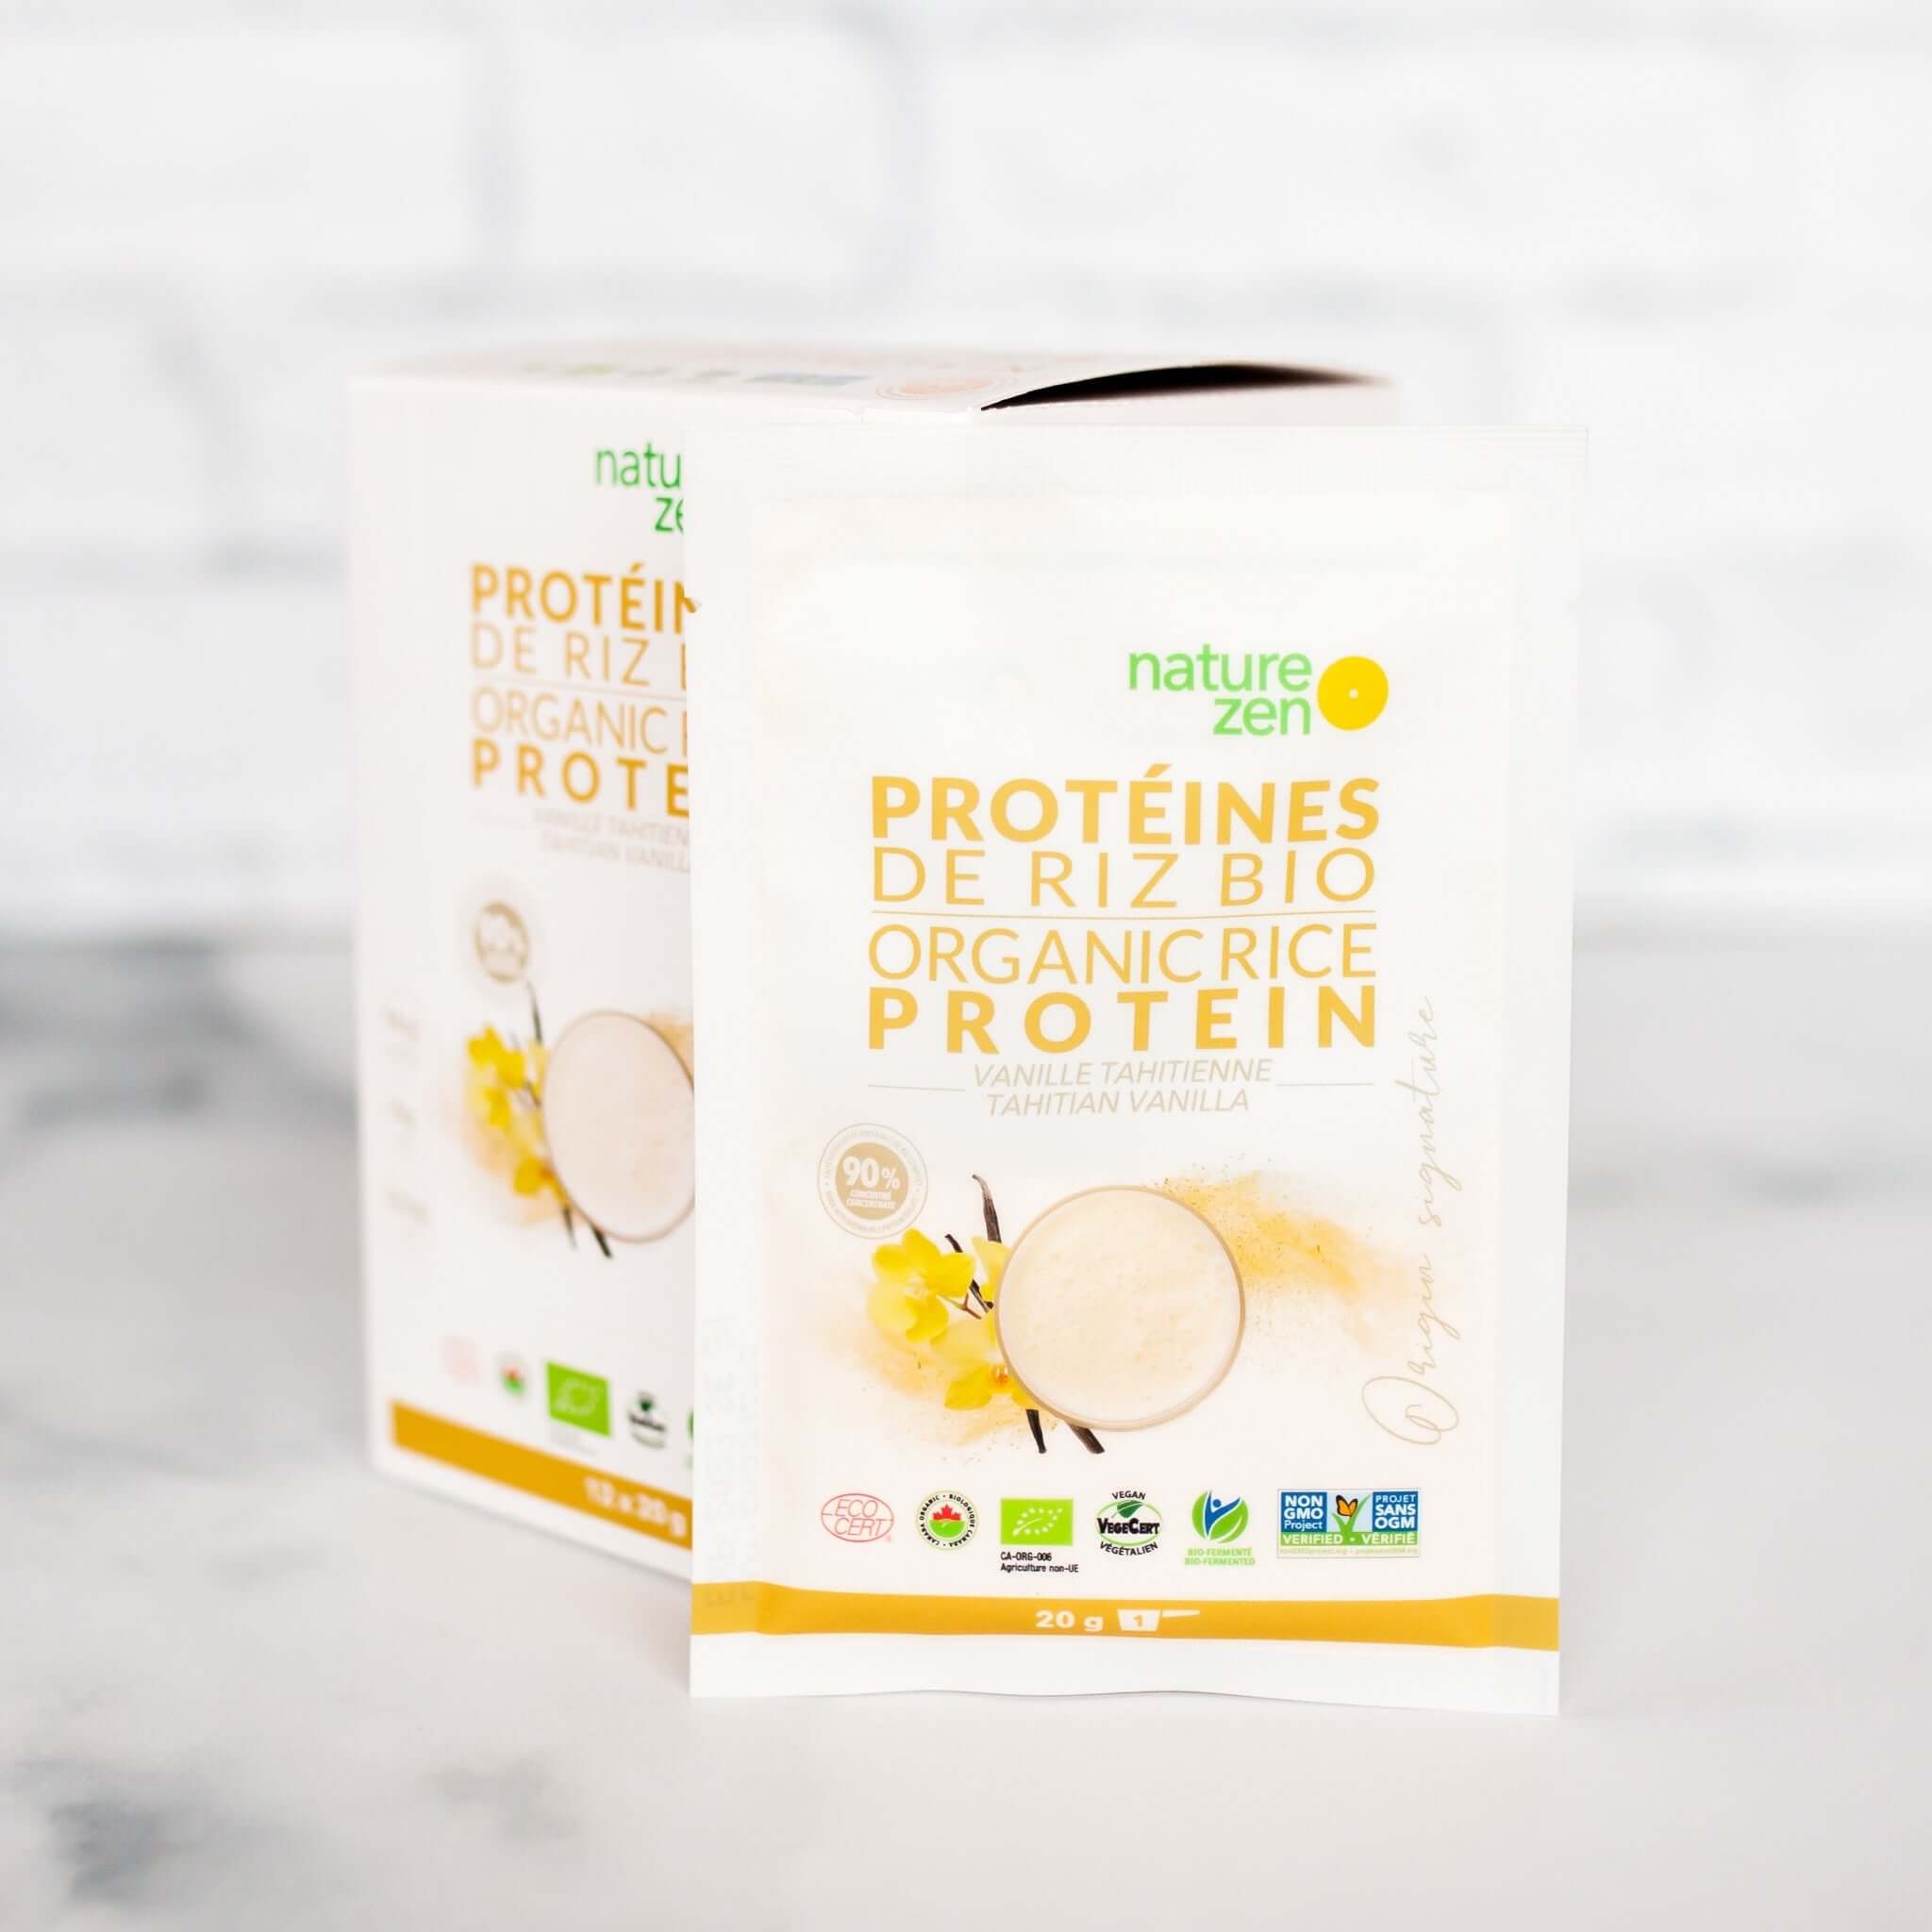 Nature Zen Origin - Organic Rice Protein Powder - Tahitian Vanilla box